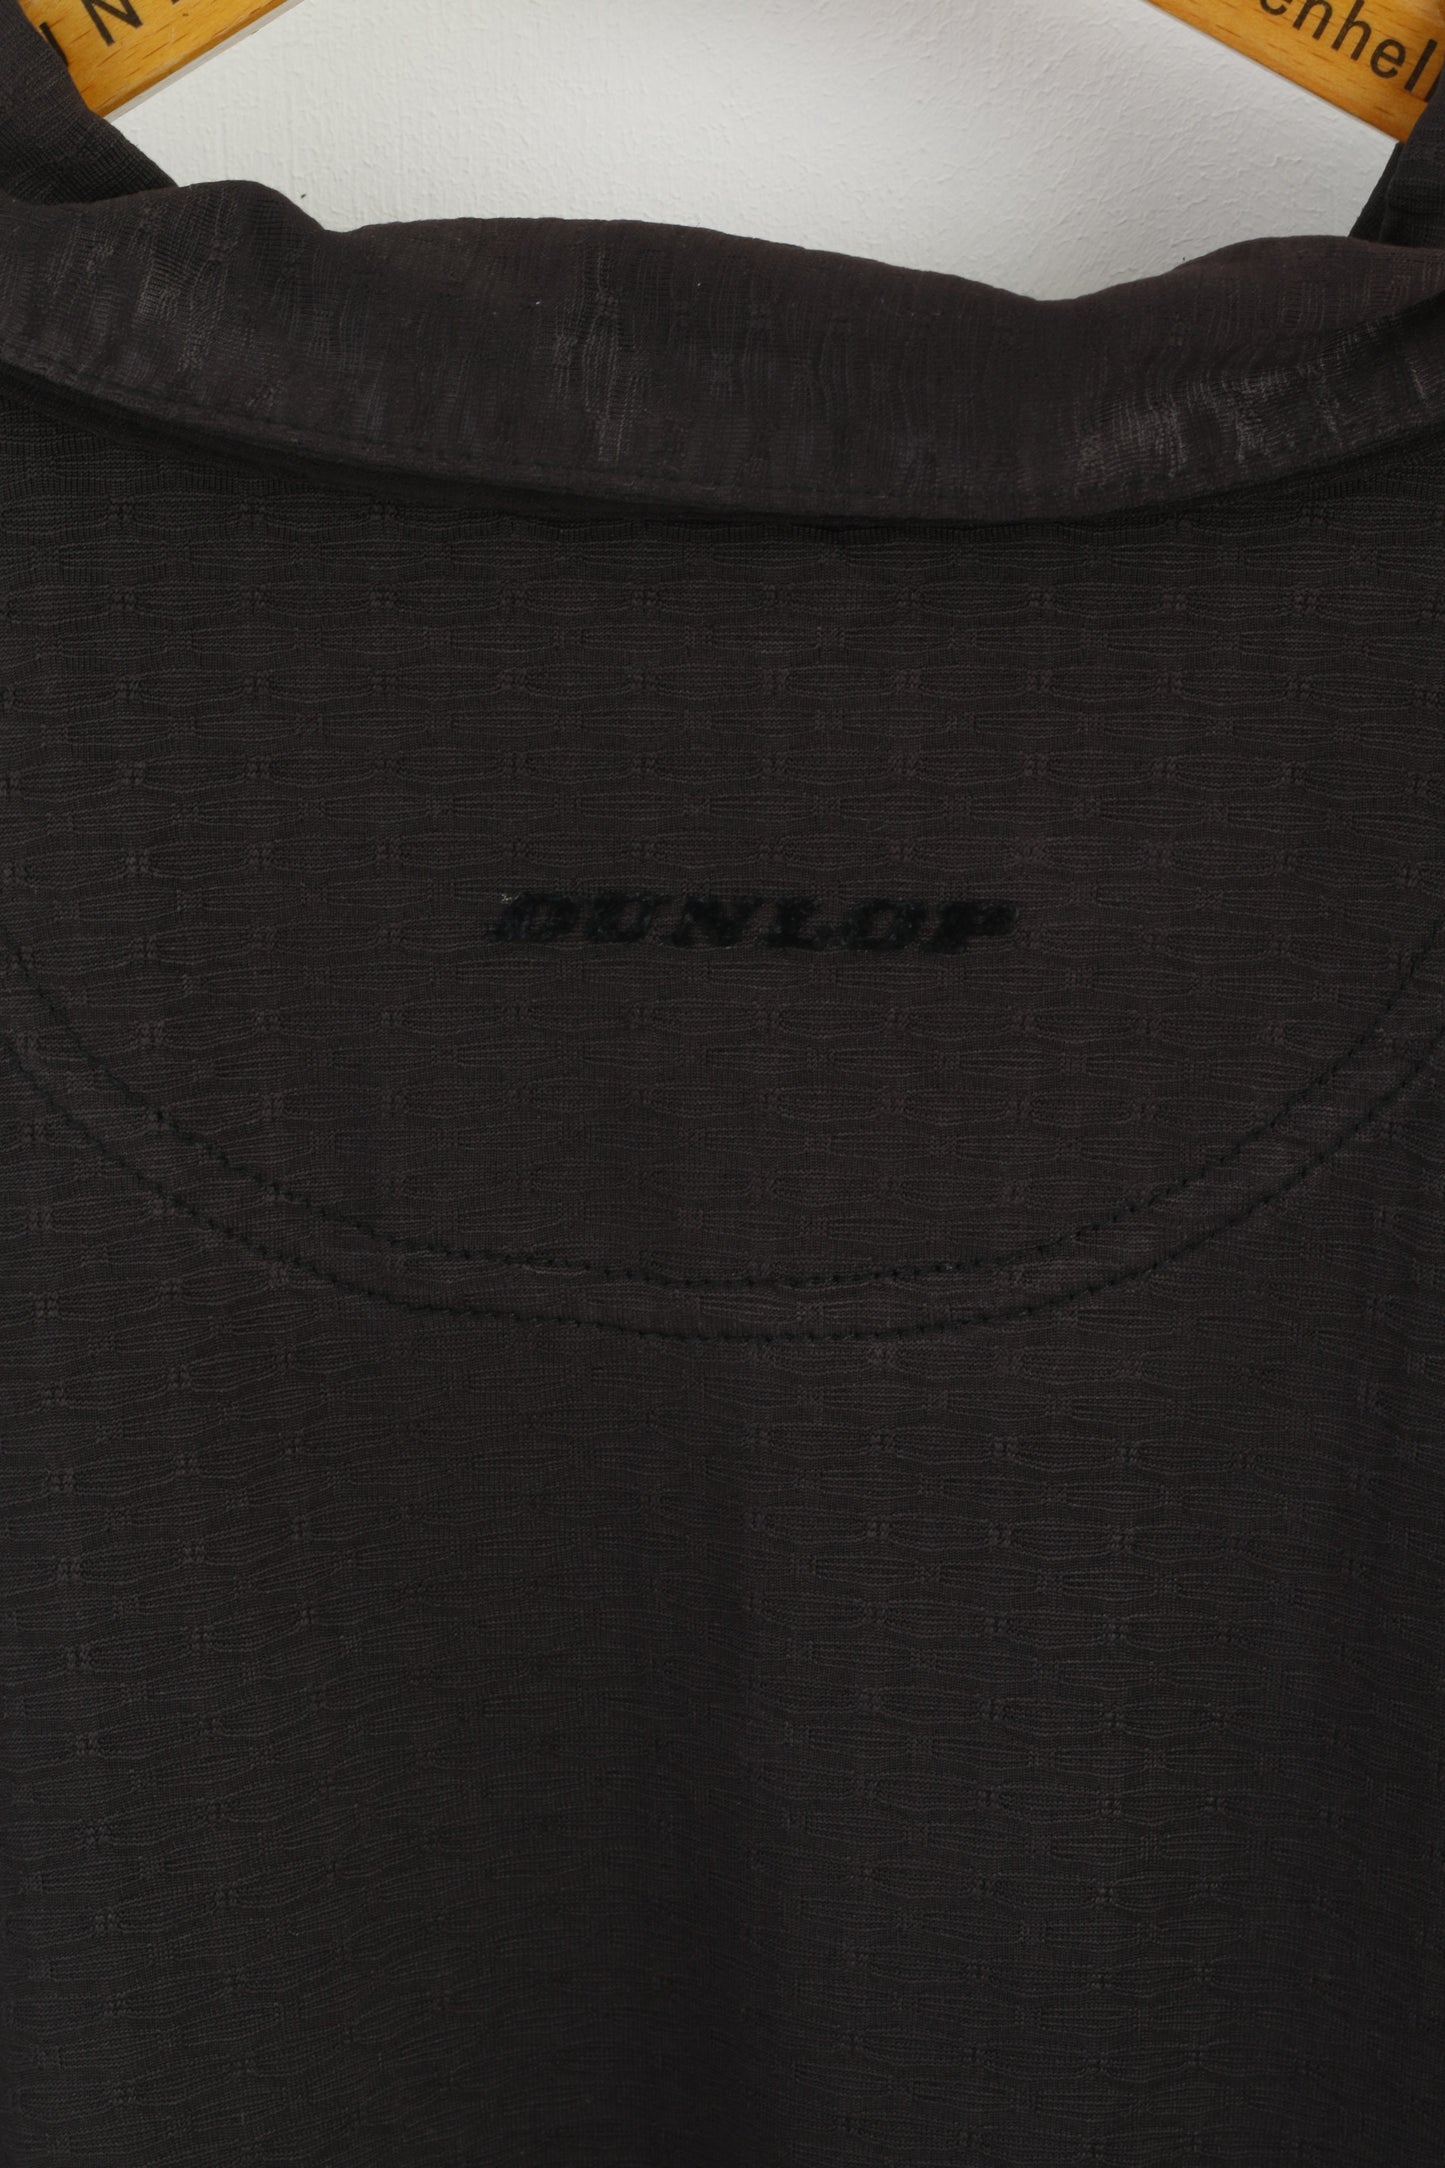 Dunlop Golf Classic Men L Polo Shirt  Black Shiny  Detailed Buttons Plain Top